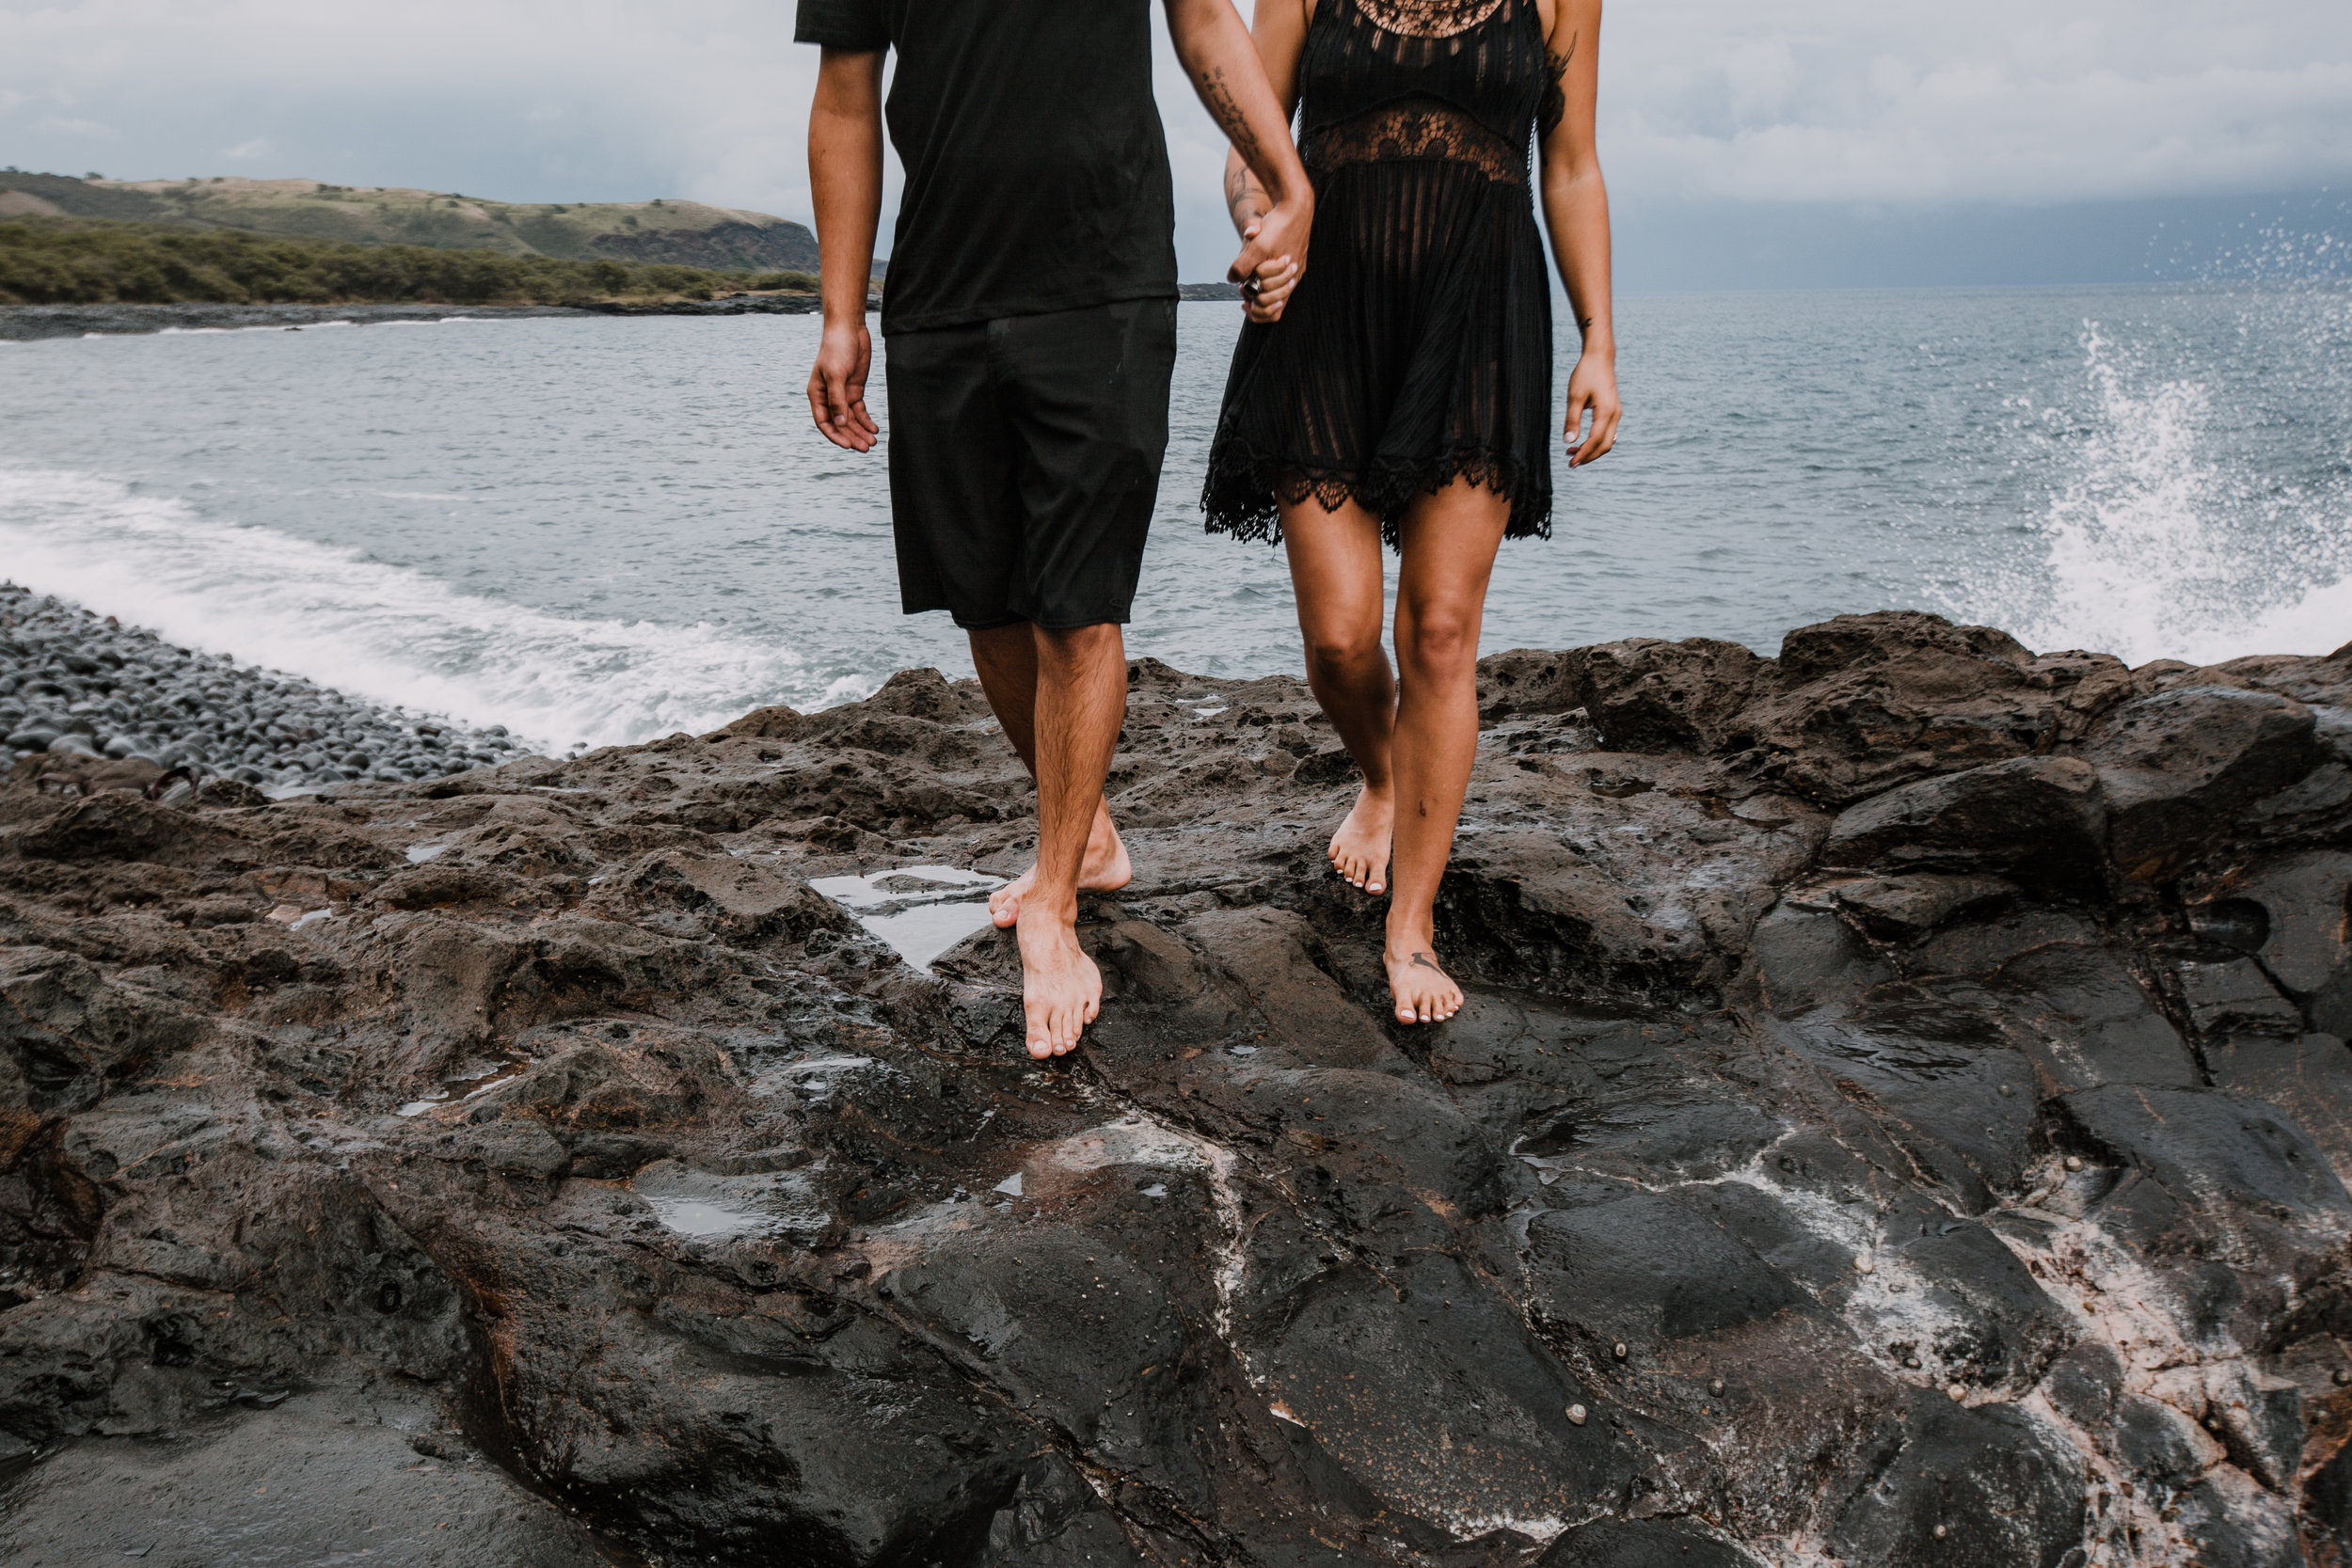 kaupo beach, hawaiian volcanic eruption, lava rock, haleakala national park, hawaii wedding photographer, hawaii elopement photographer, maui wedding, maui engagements, maui elopement